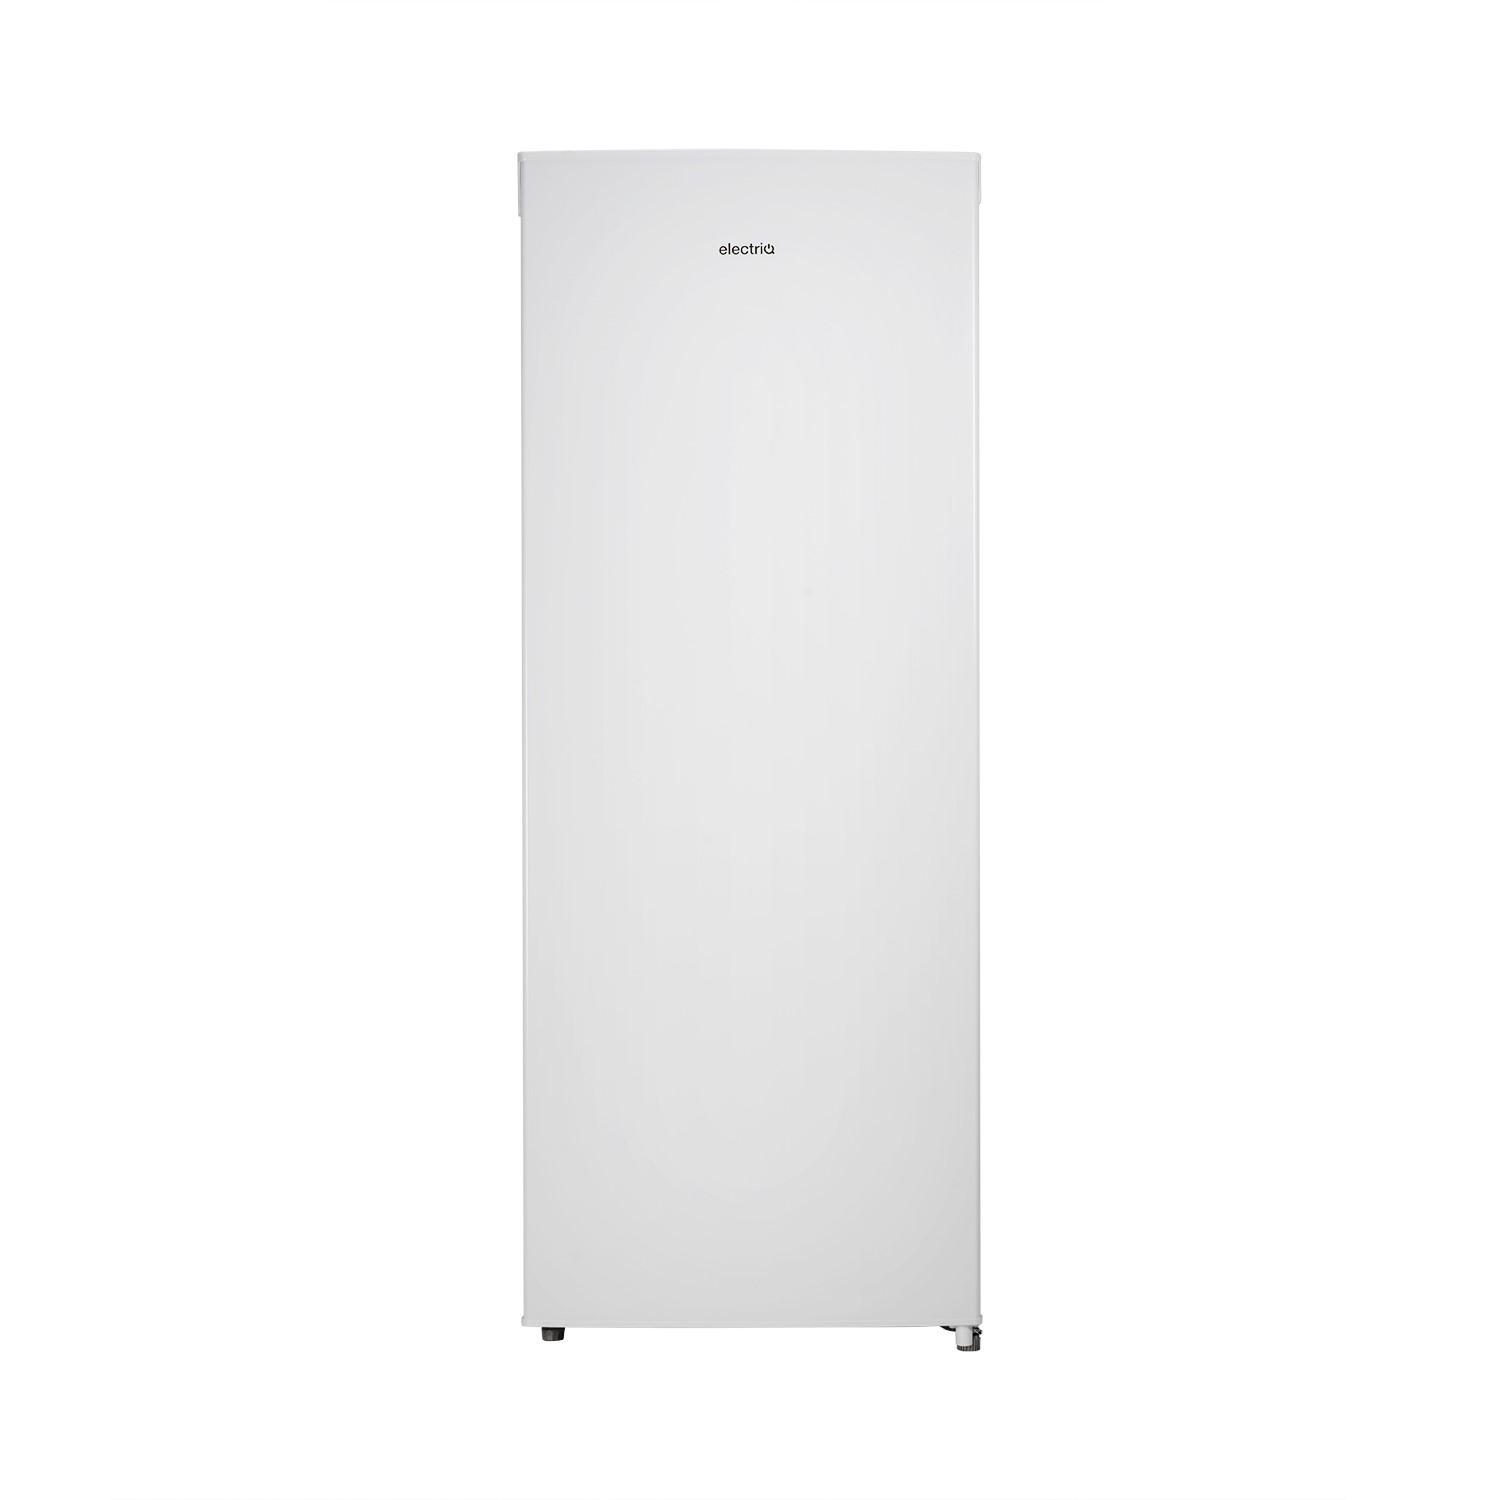 electriQ 157 Litre Freestanding Upright Freezer- White